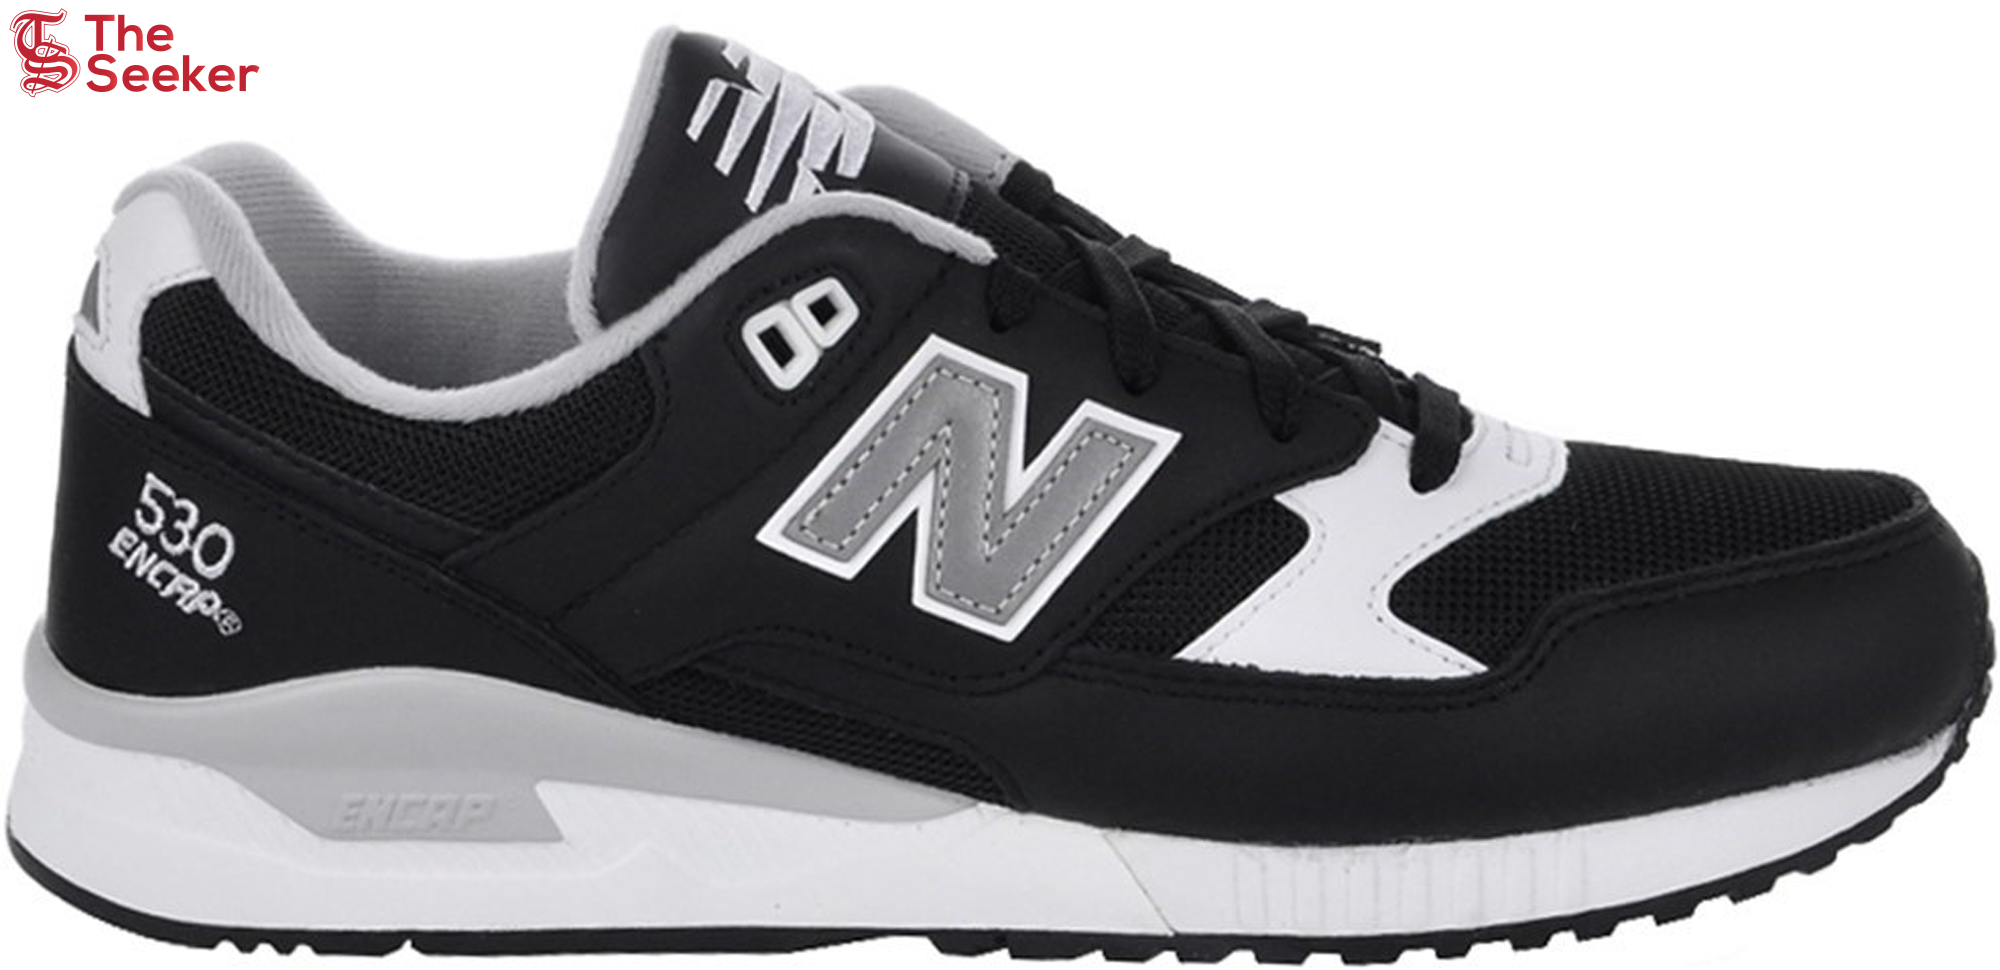 New Balance 530 Black White